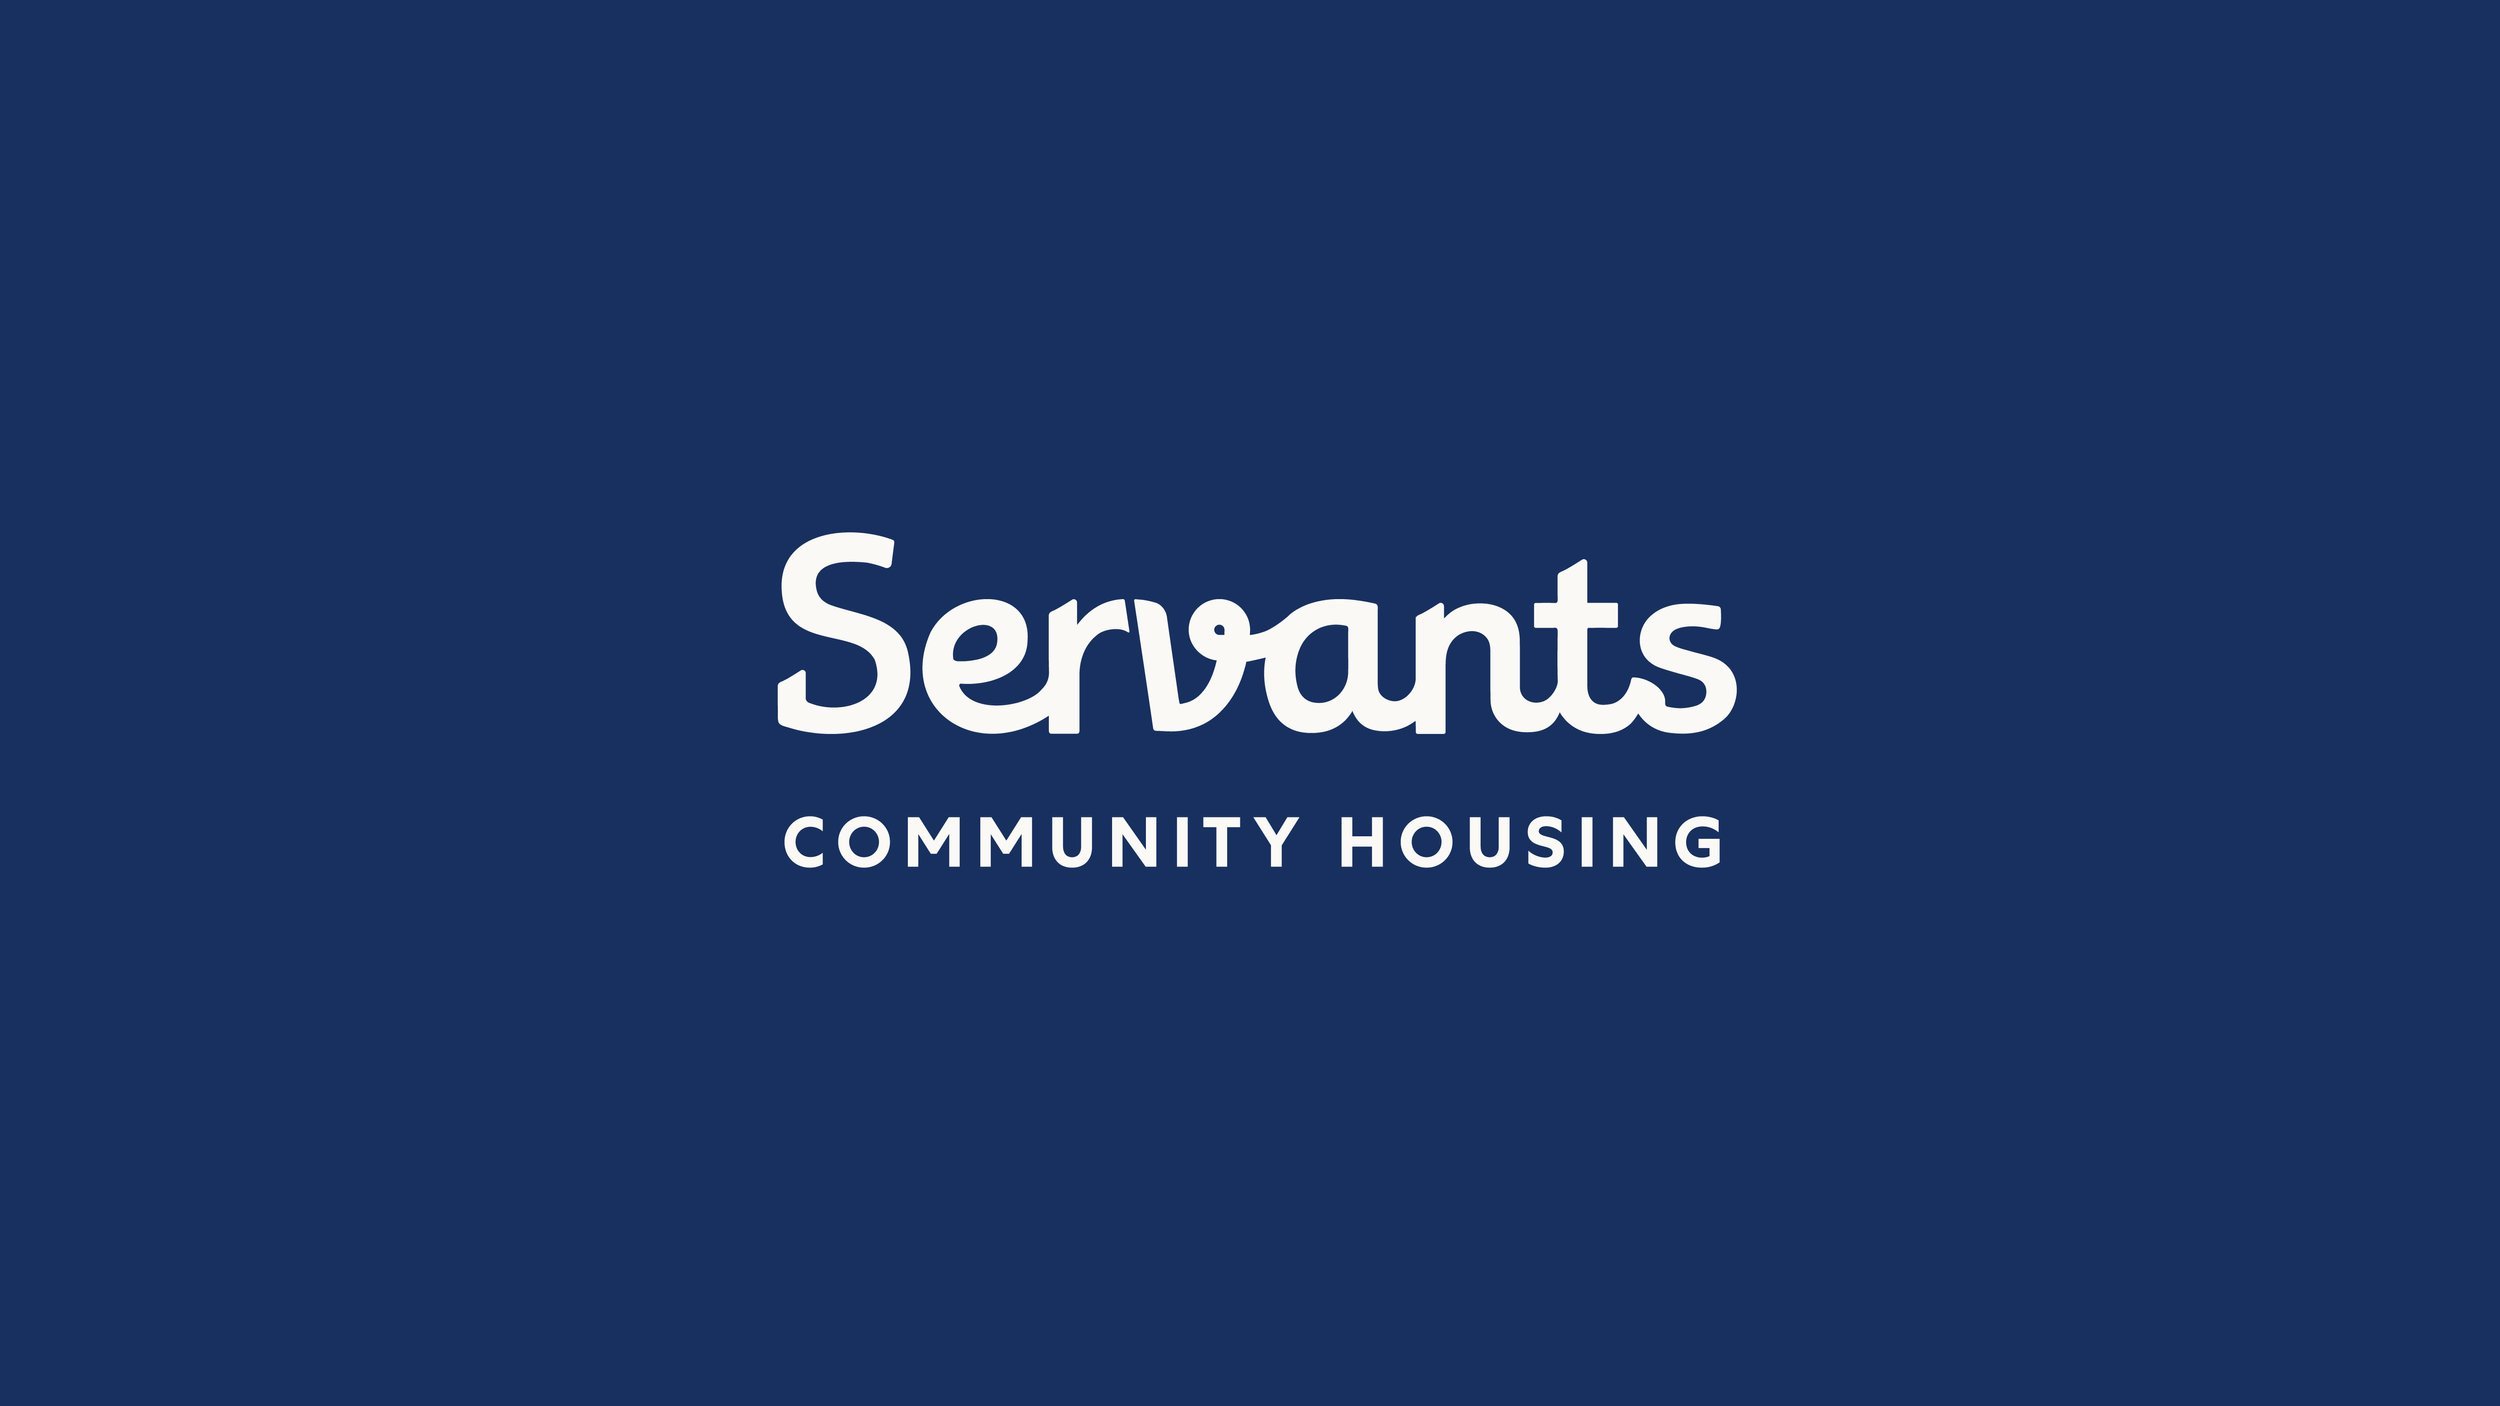 Servants社区住房